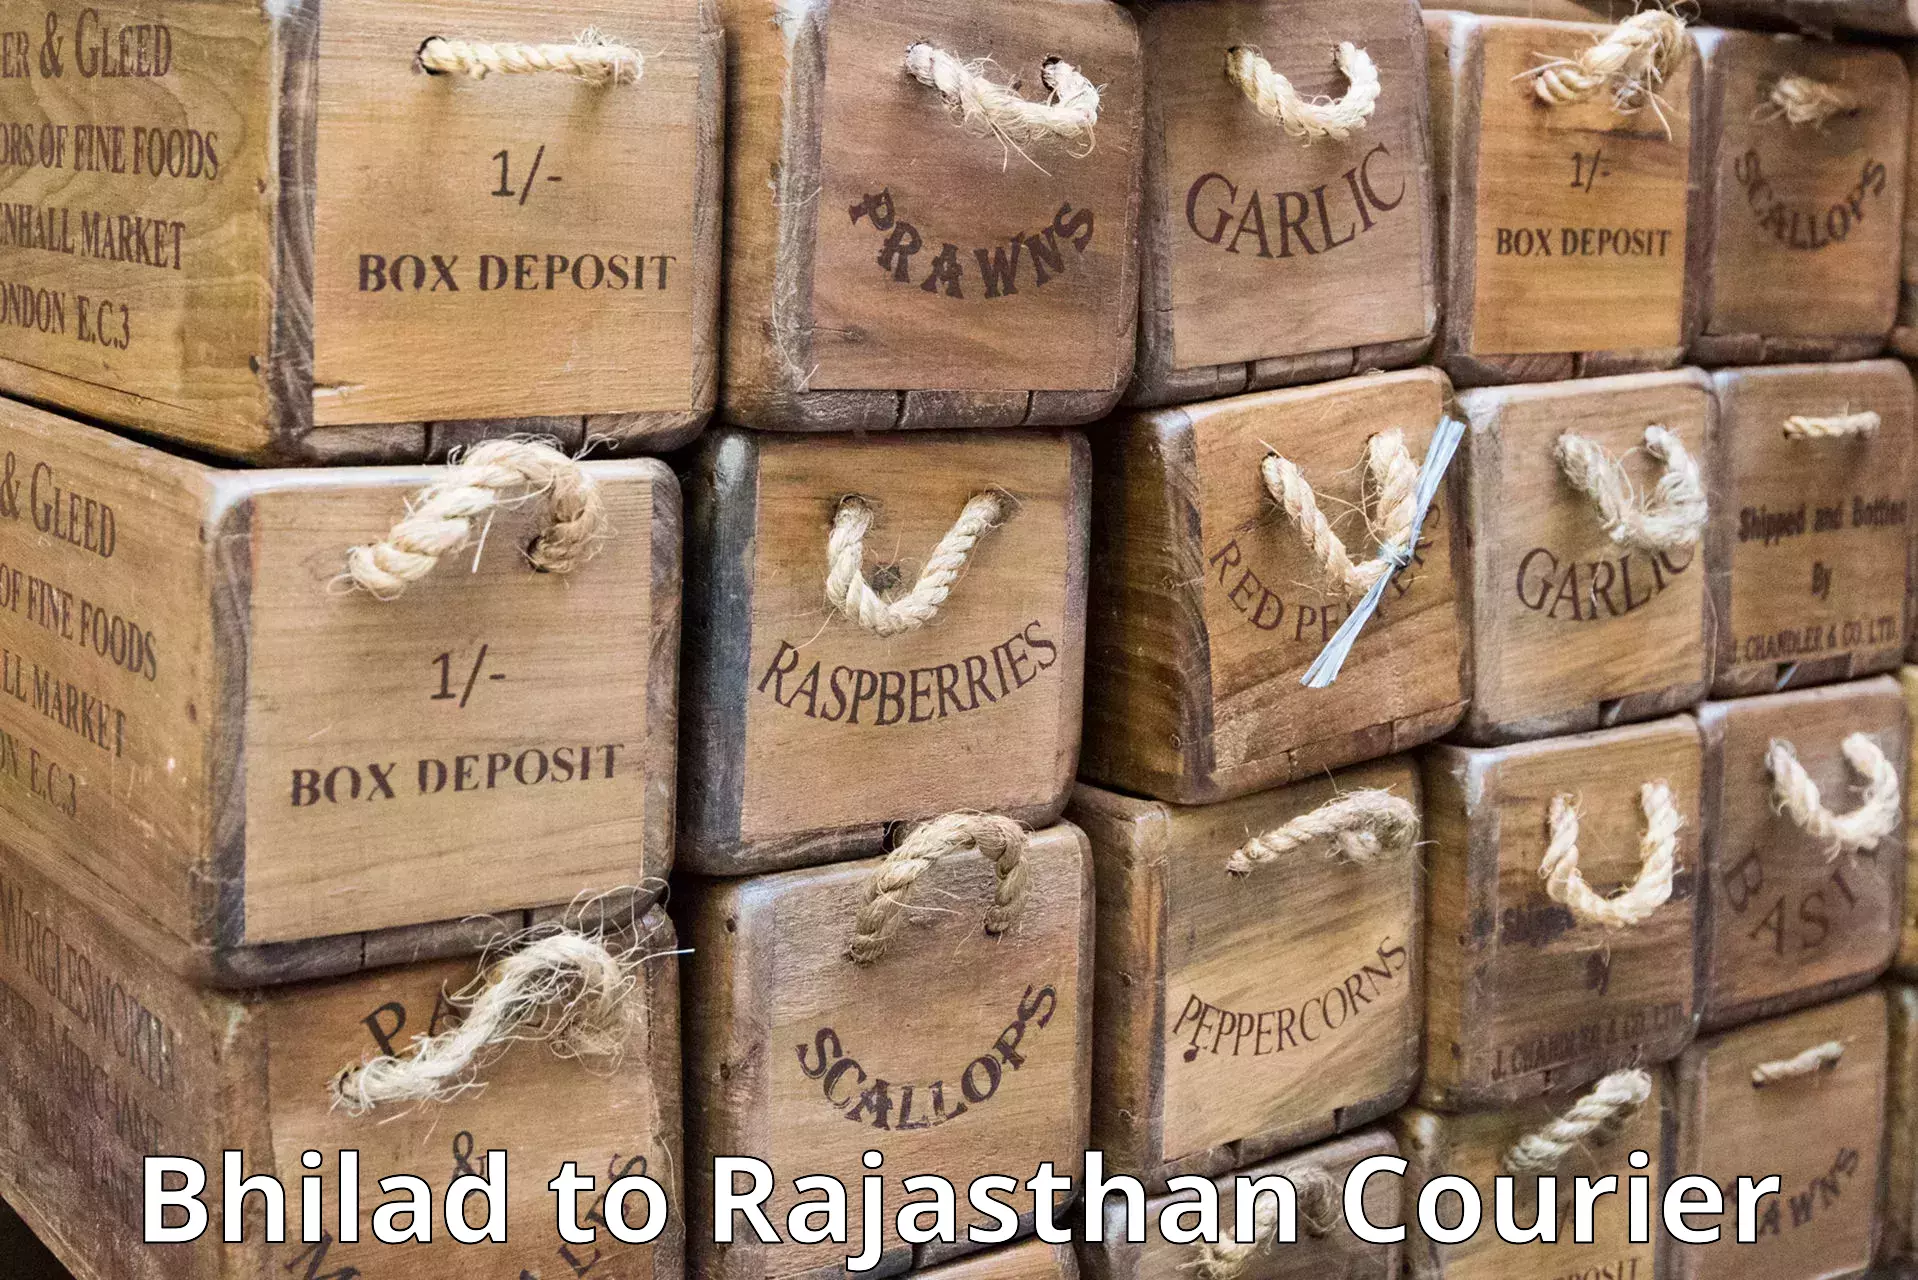 Next-day delivery options Bhilad to Pratapgarh Rajasthan